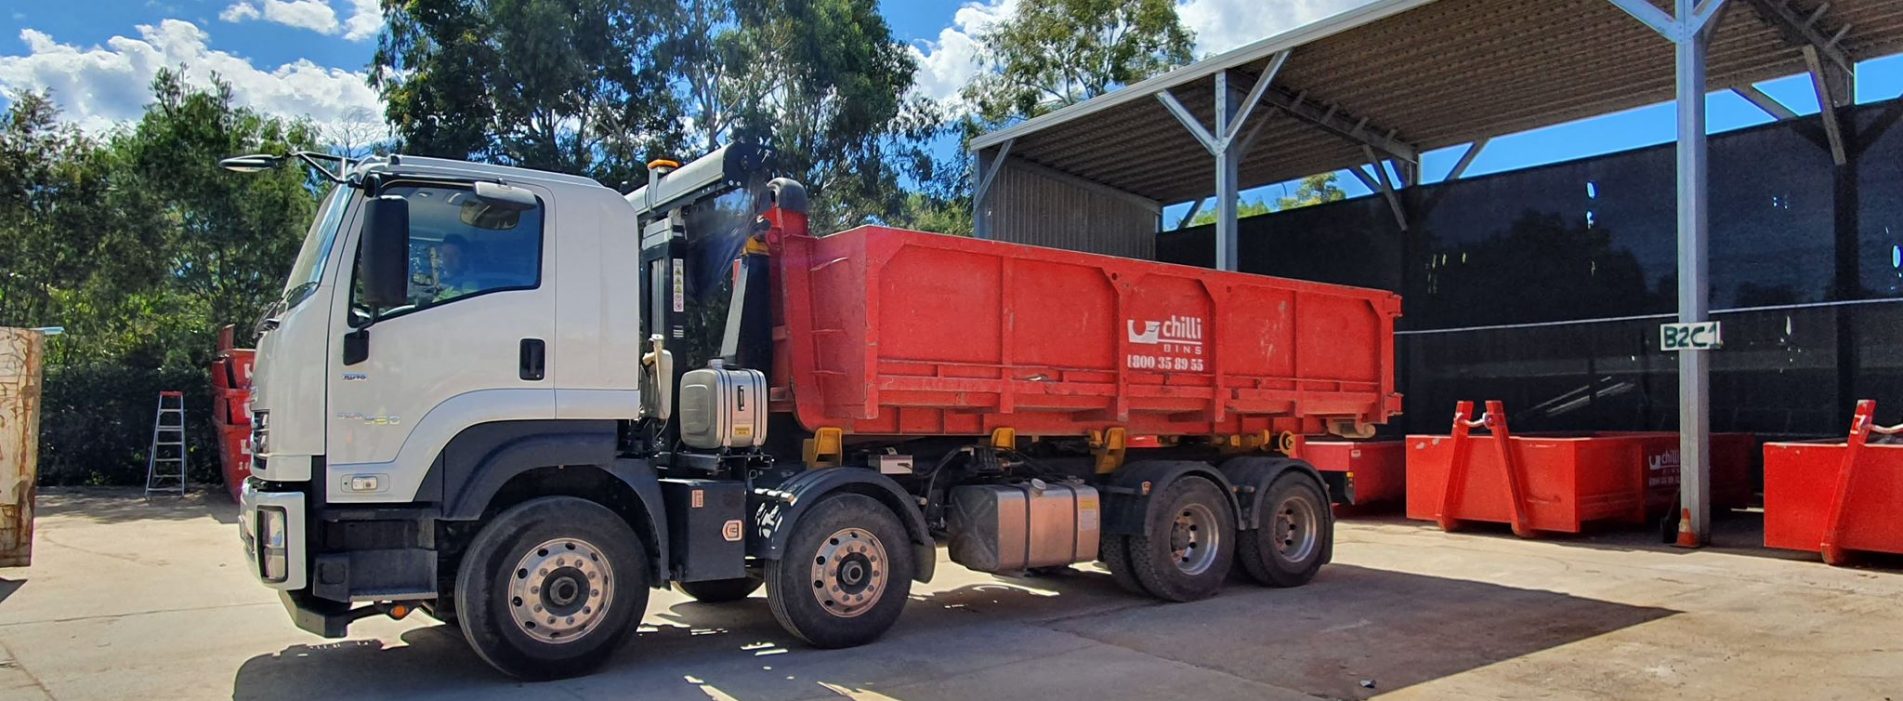 Truck Parked in A Parking Lot — Cheap Skip Bin Hire in Sunshine Coast, QLD